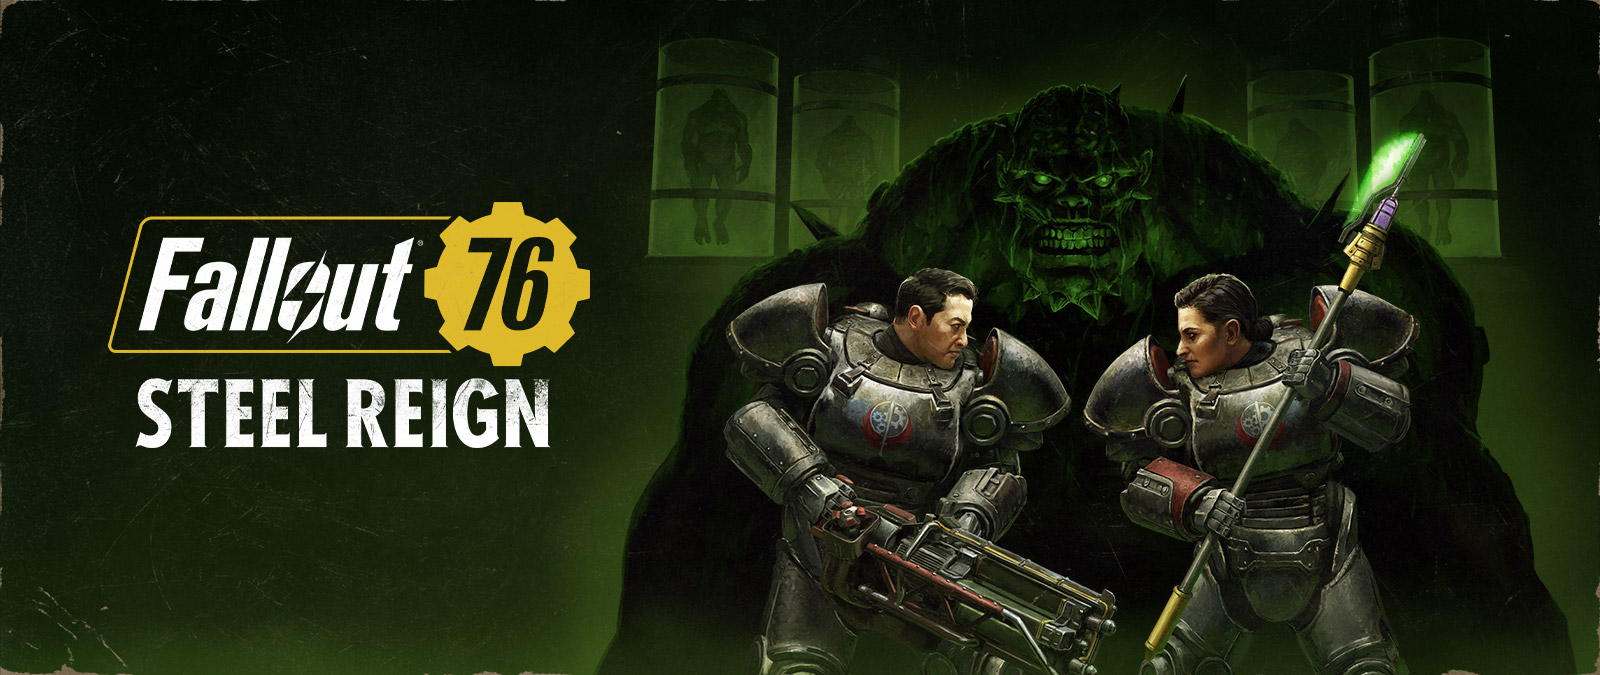 Fallout 76，Steel Reign，兩名穿著機械裝的角色對峙，背景有個大怪獸。